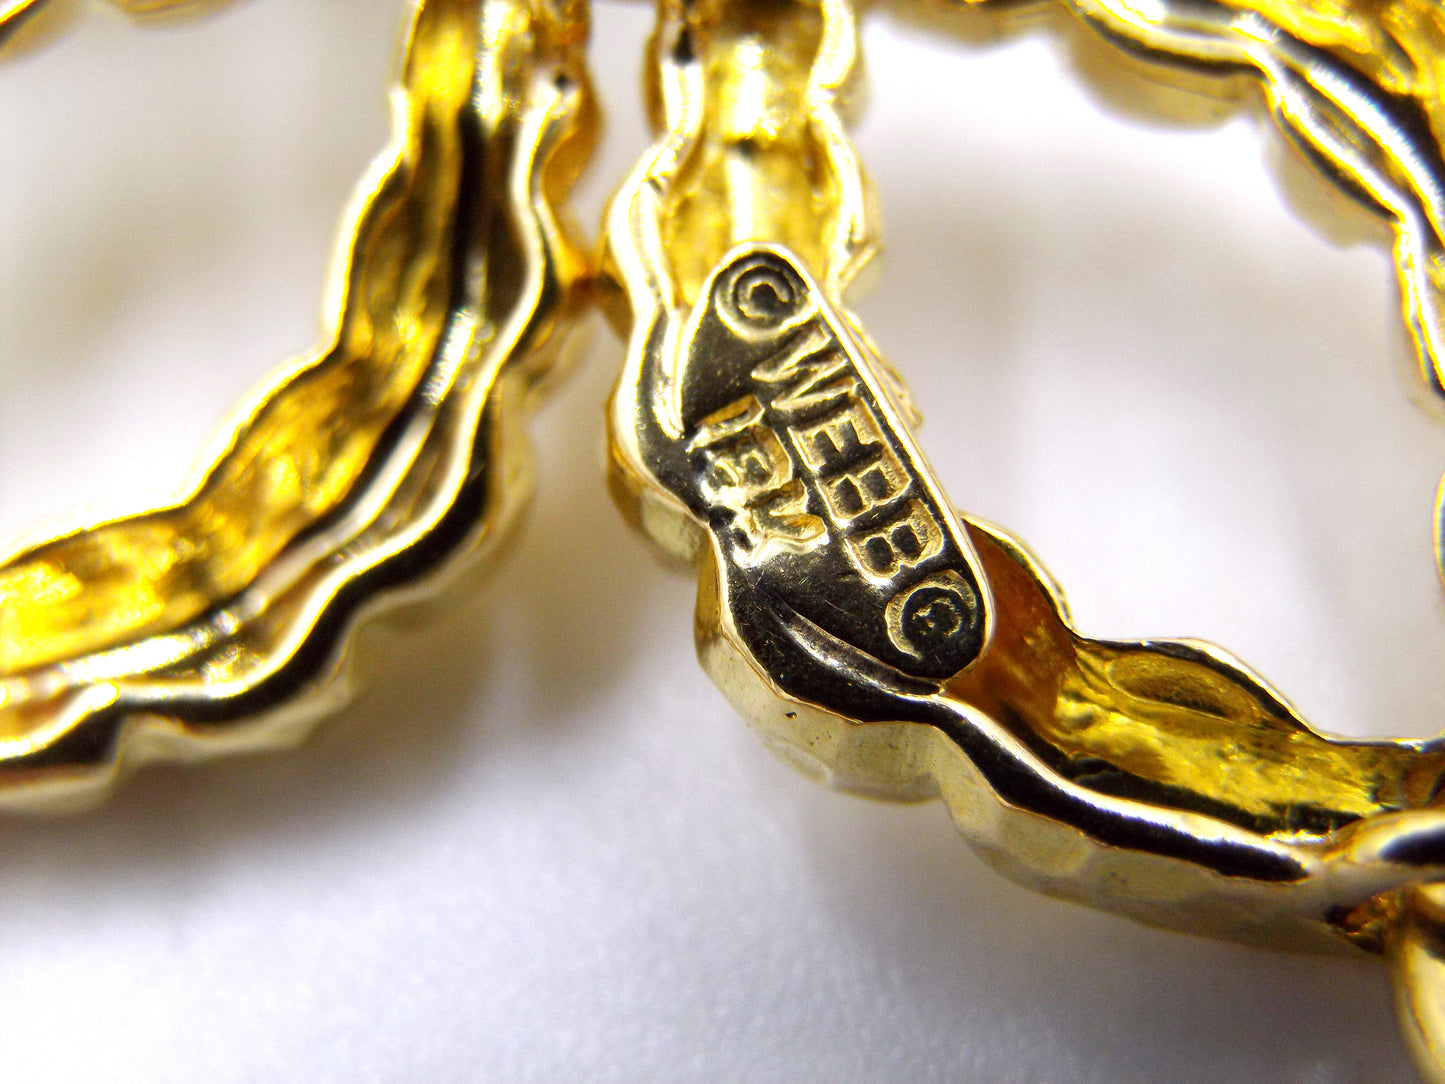 David Webb 18K Yellow Gold Chain Necklace